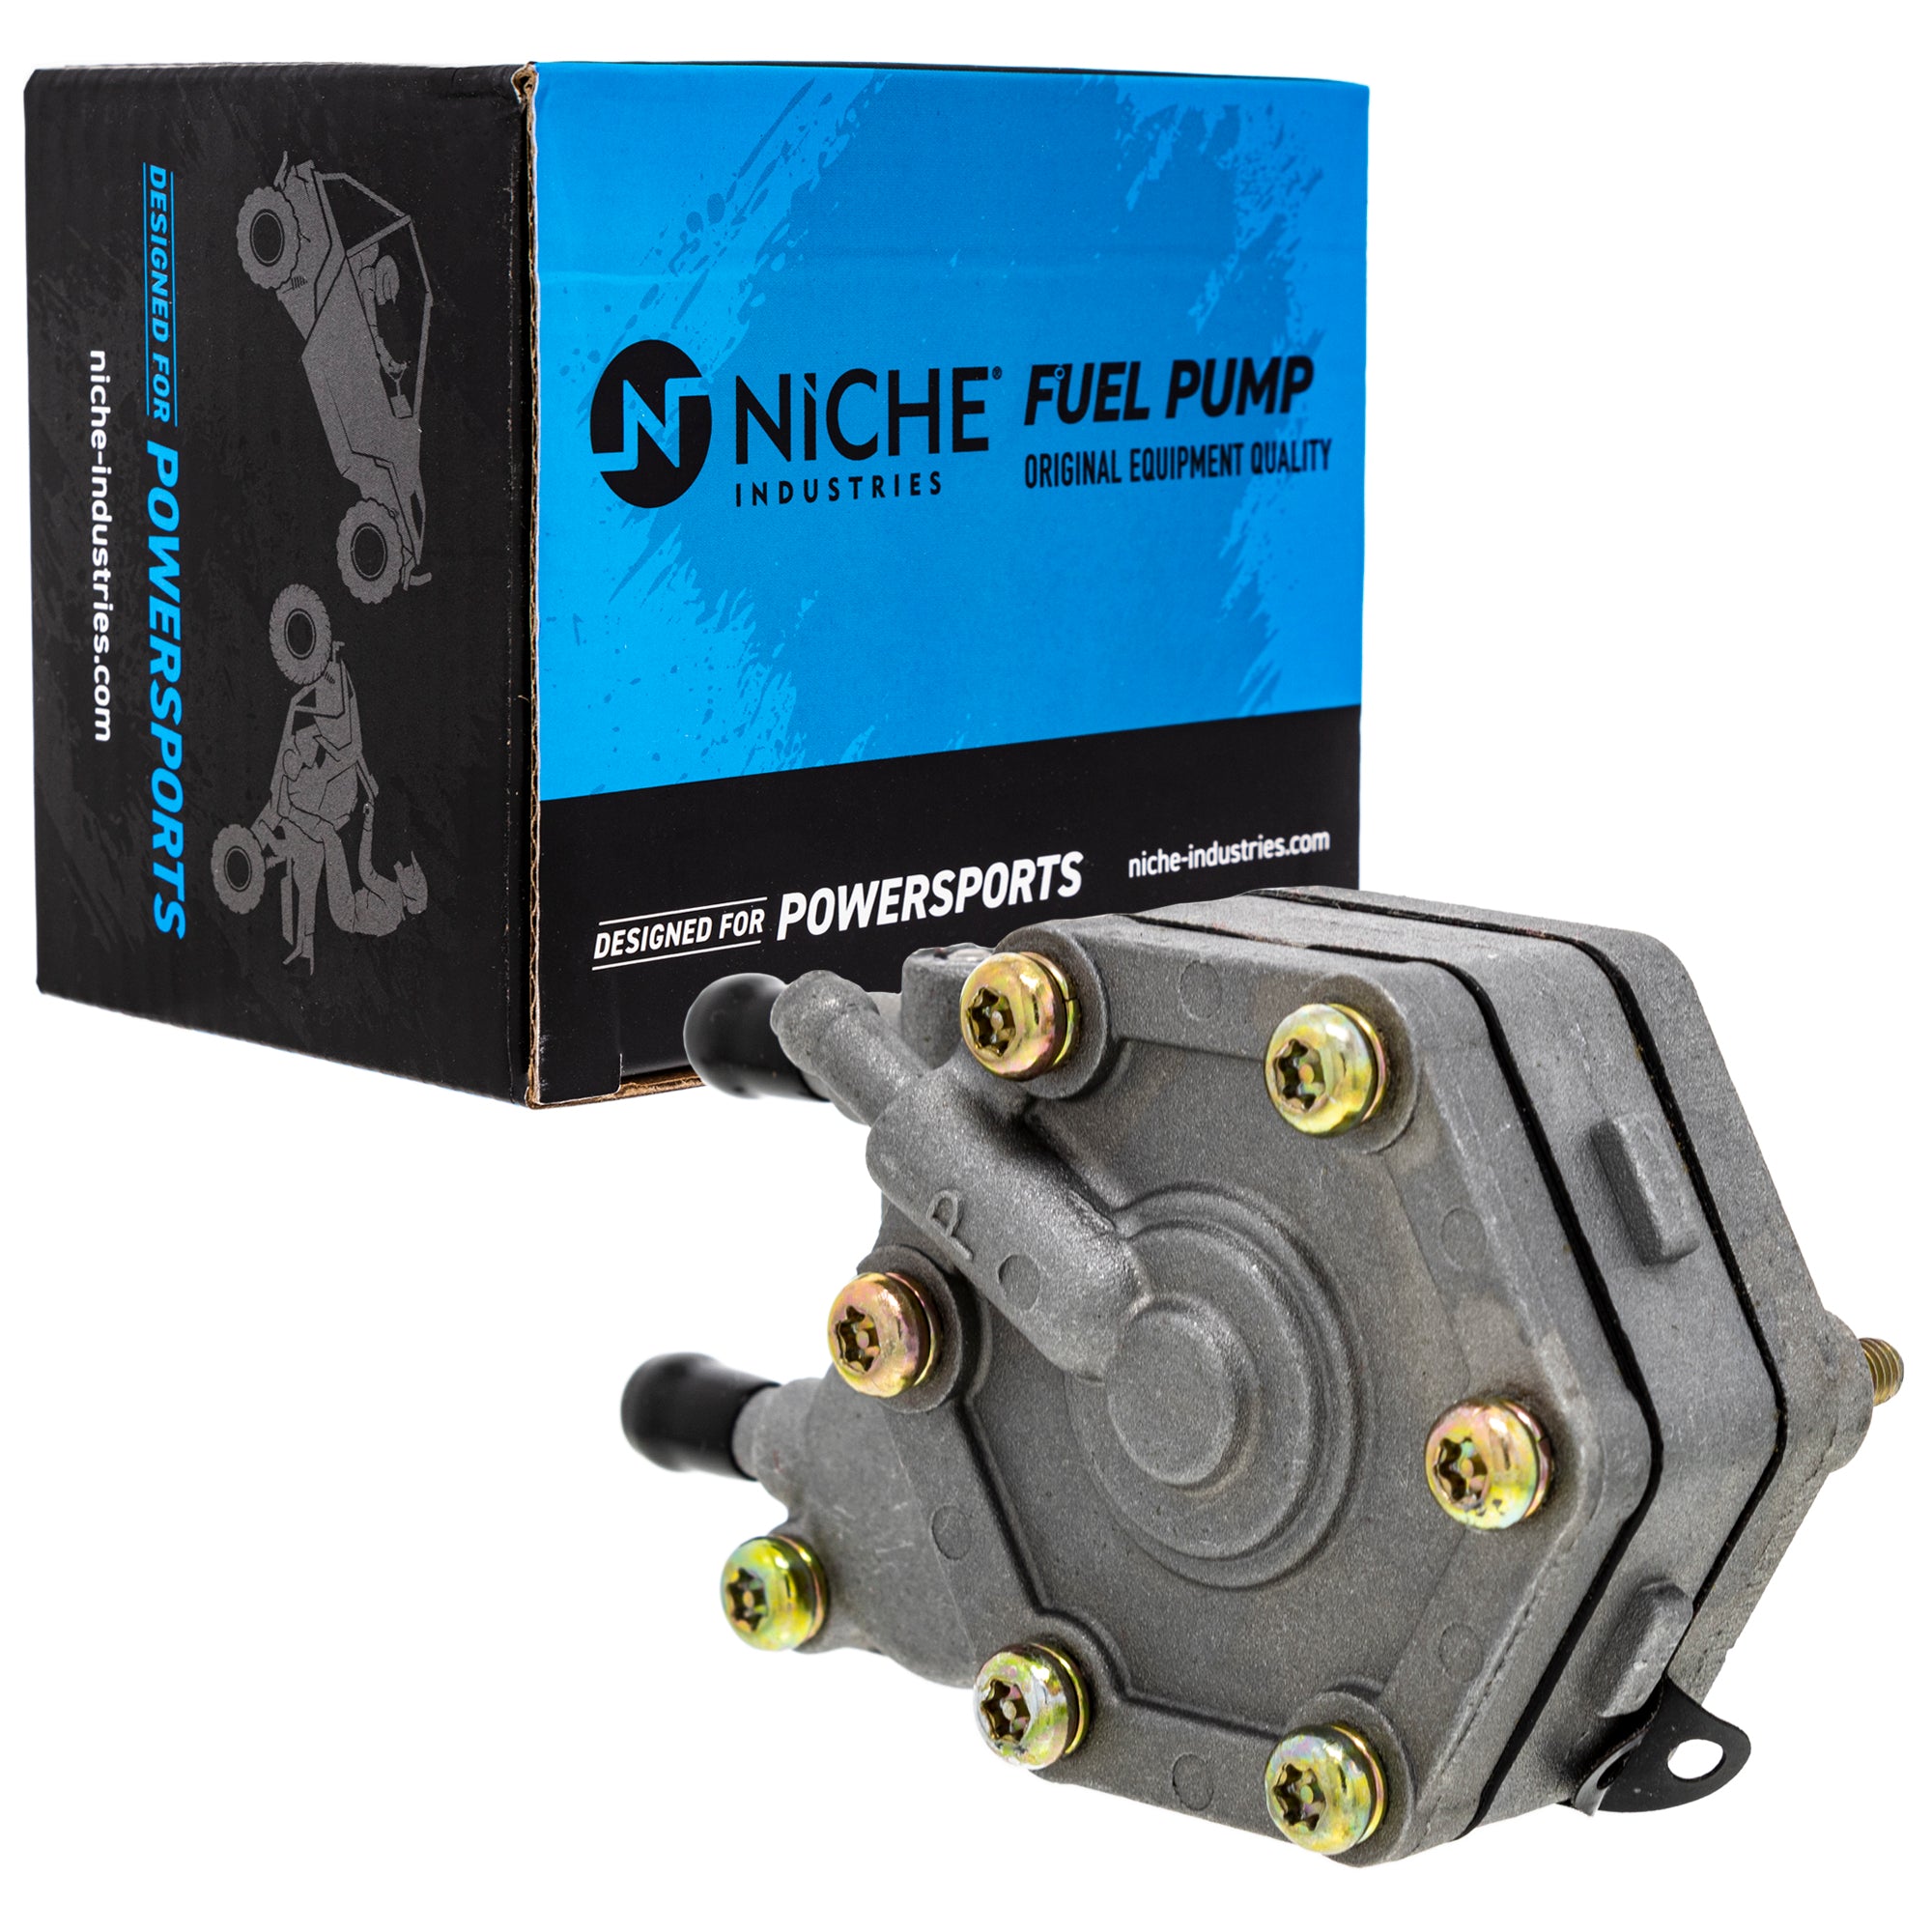 NICHE Carburetor Kit